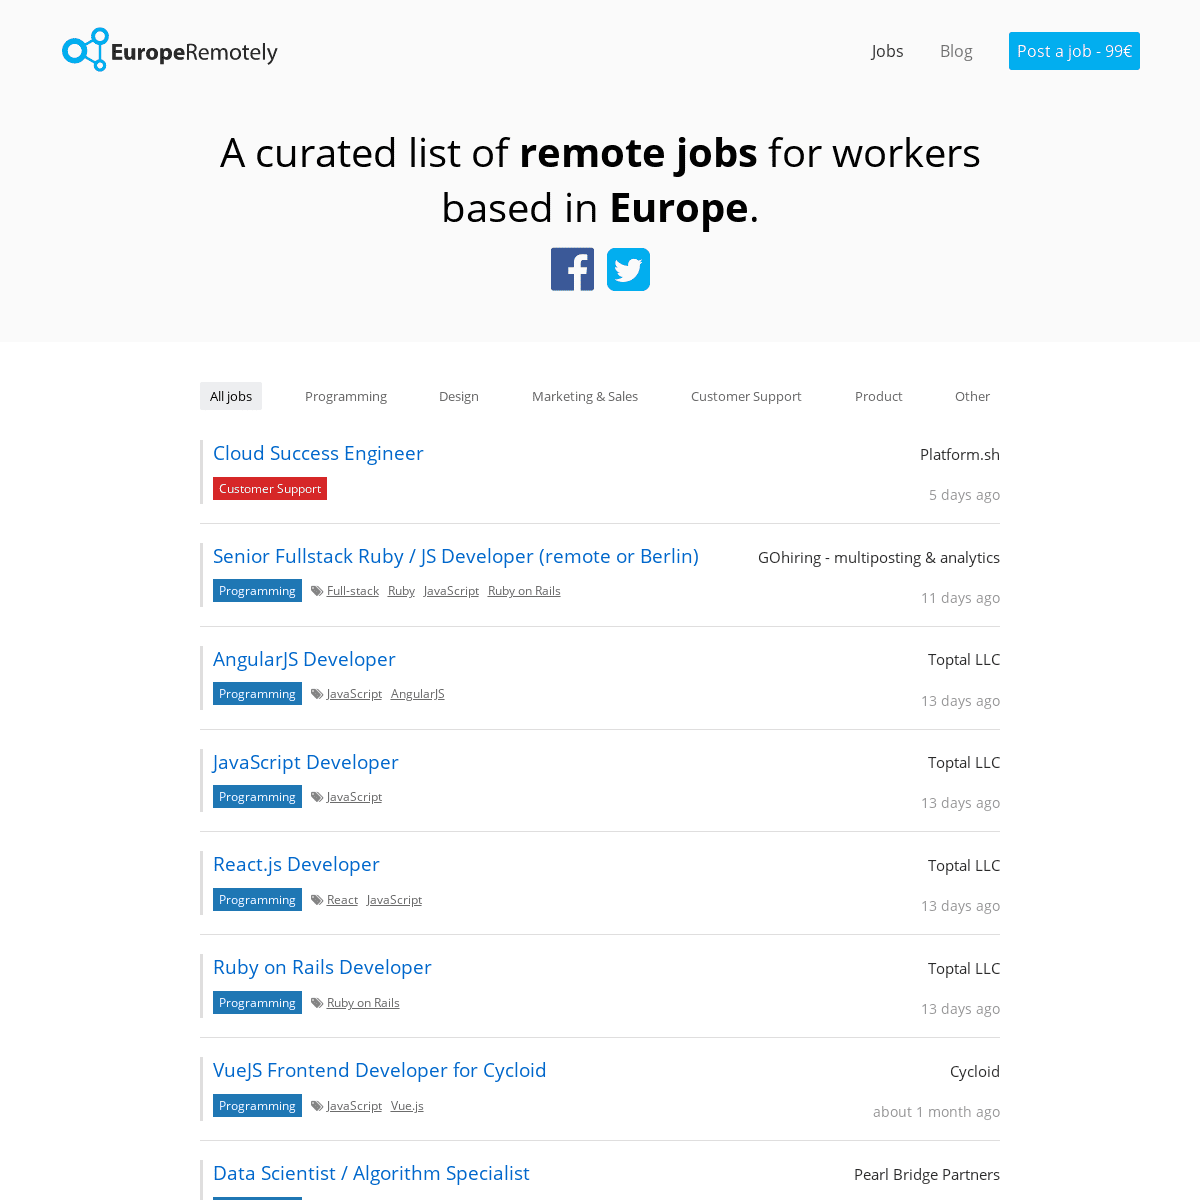 A complete backup of europeremotely.com